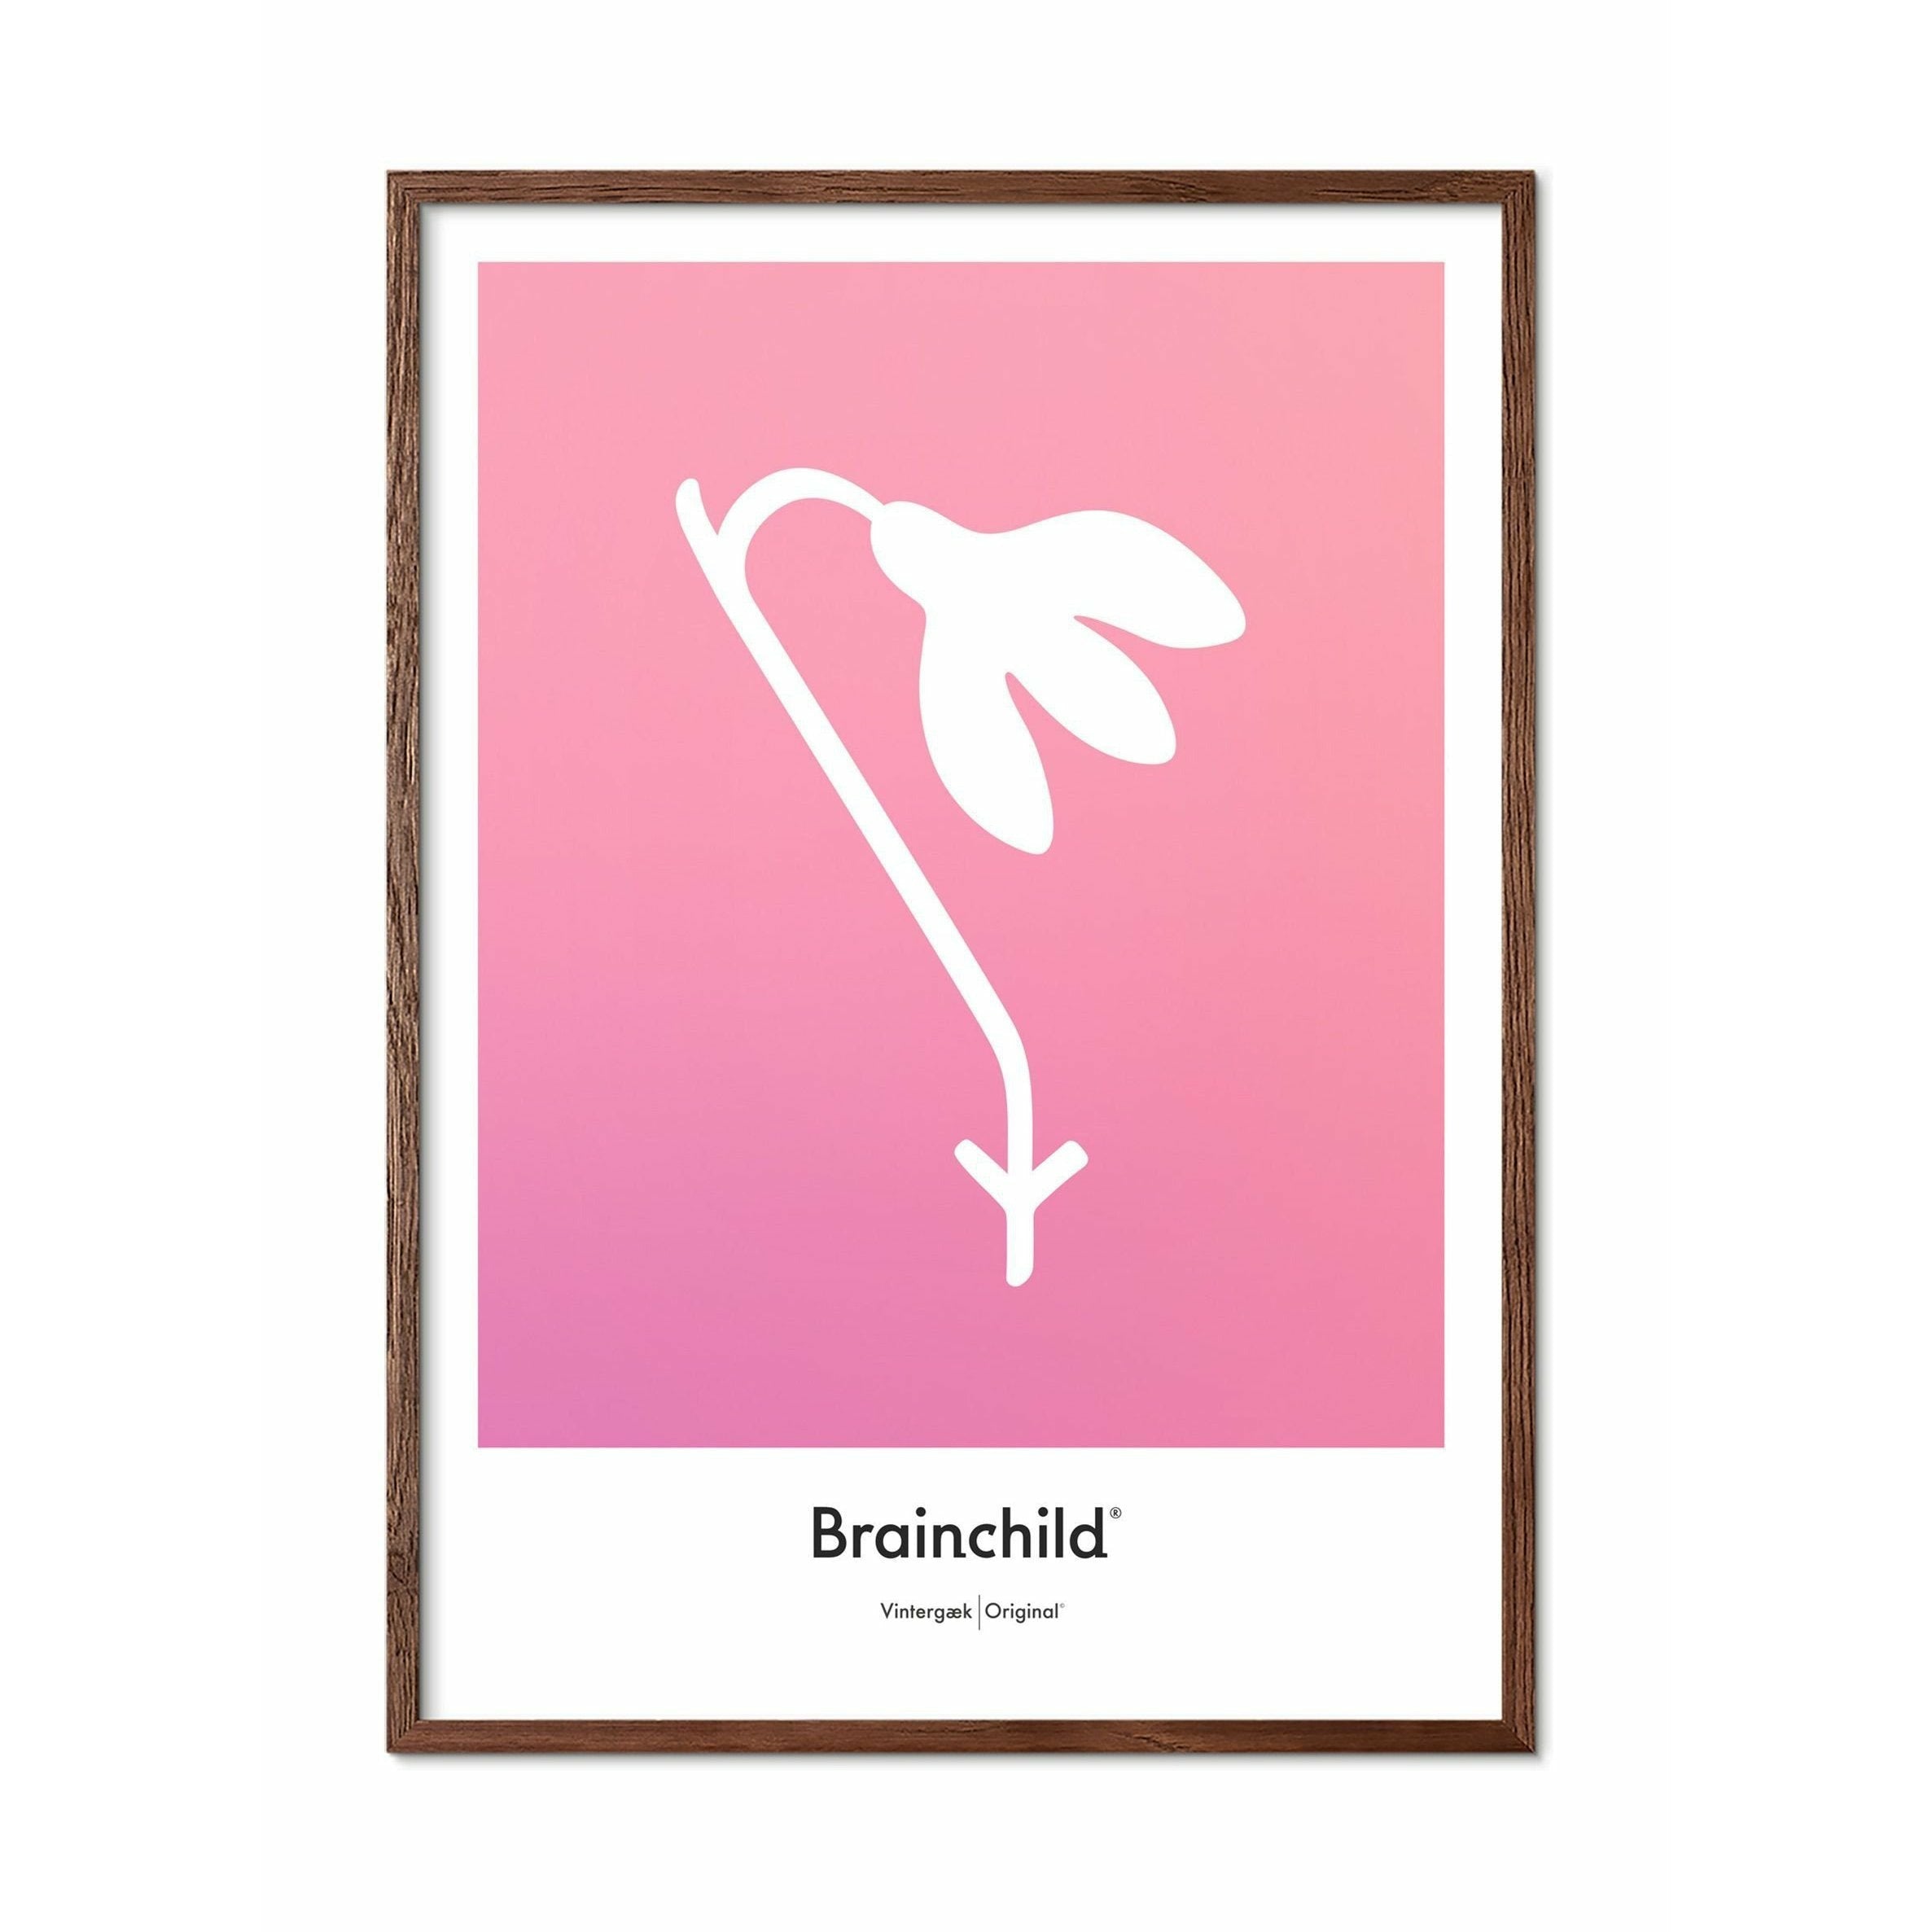 Brainchild Vintergæk Designikon Plakat, Ramme I Mørkt Træ 50X70 Cm, Rosa